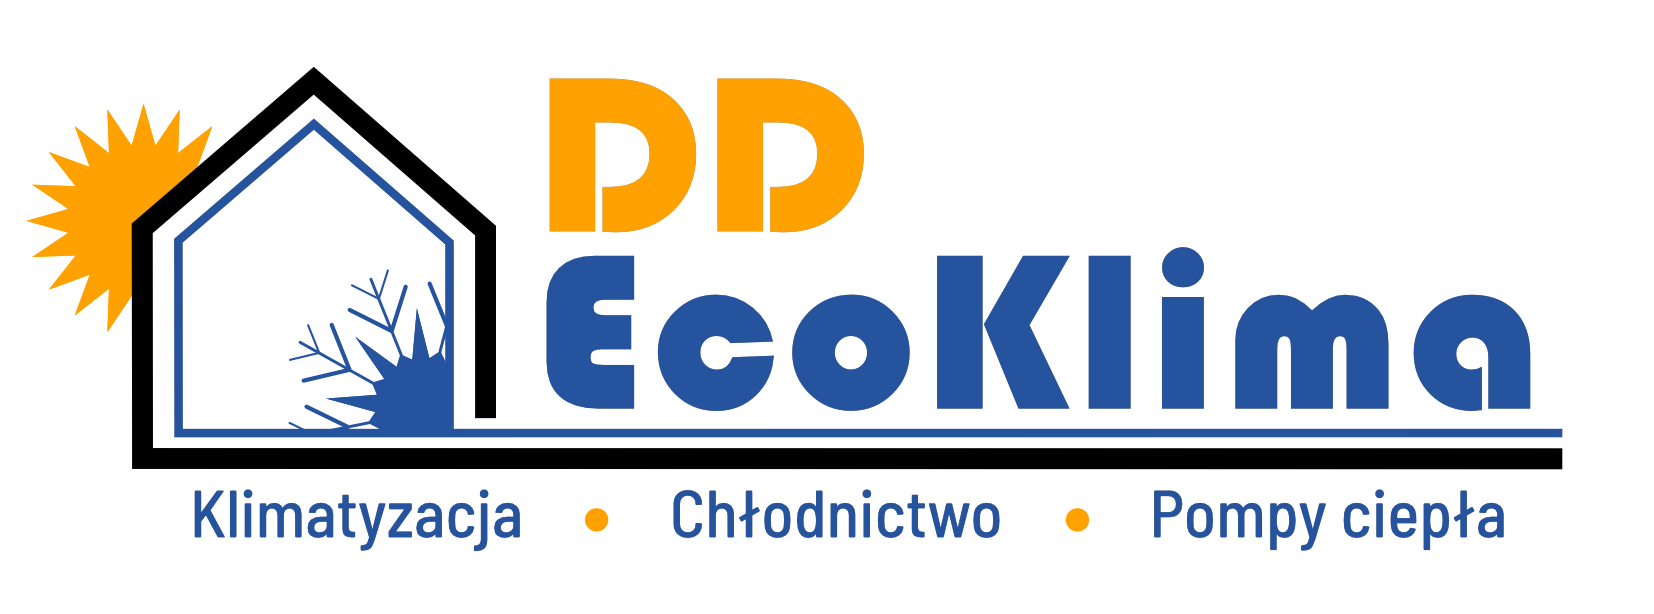 DD Ecoklima logo